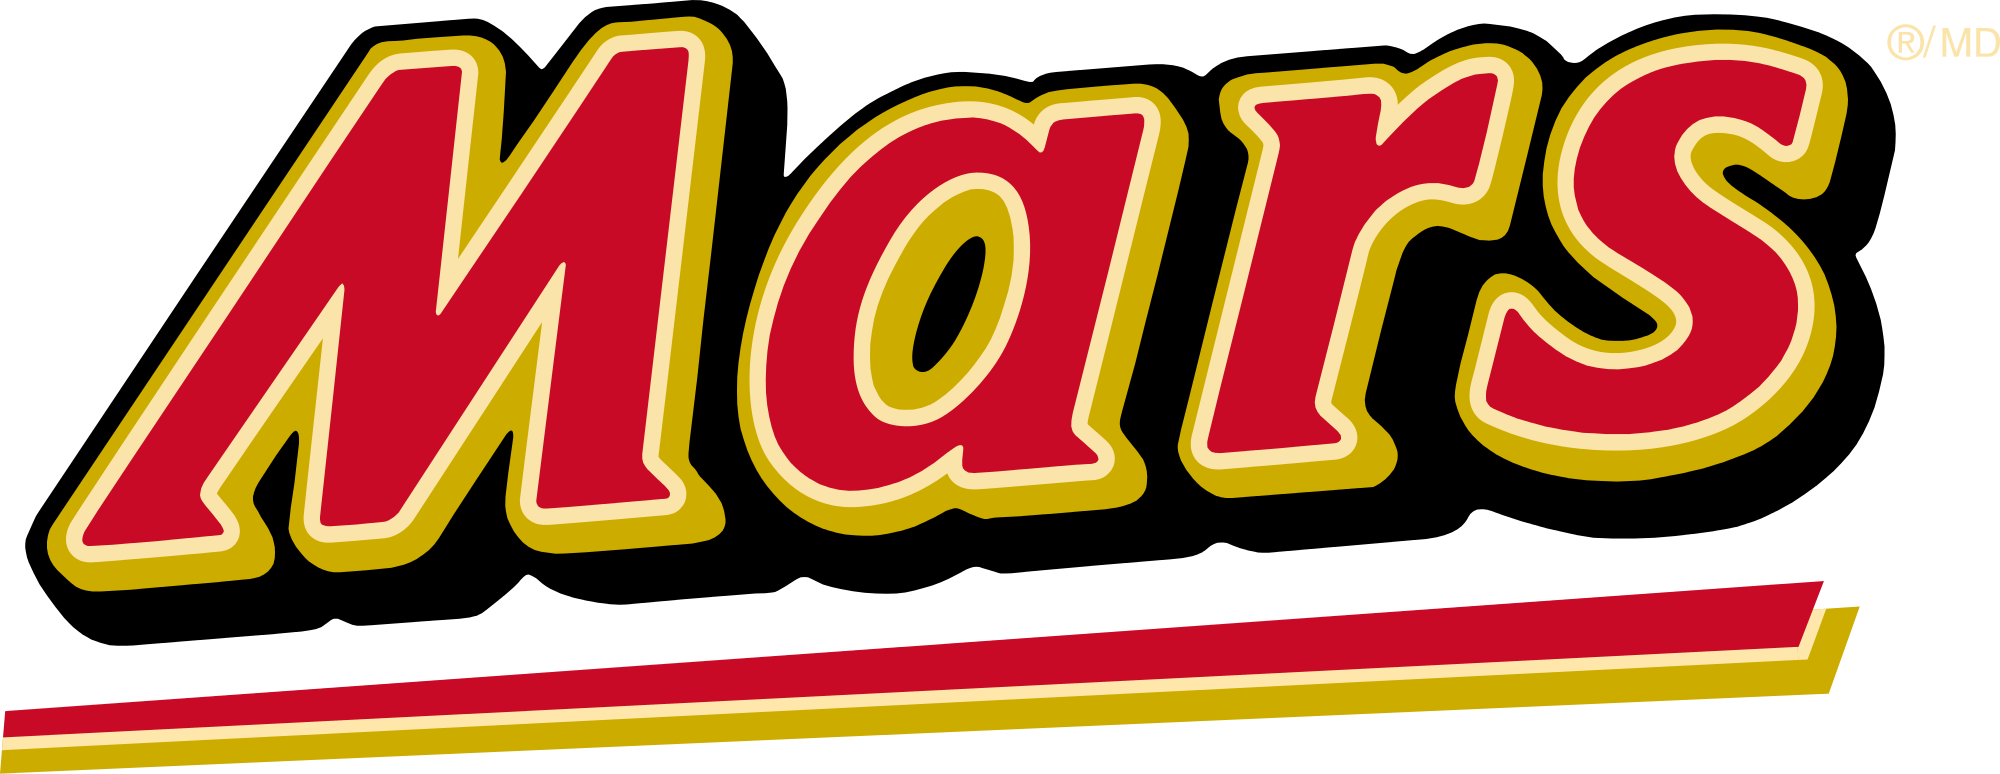 mars clipart logo